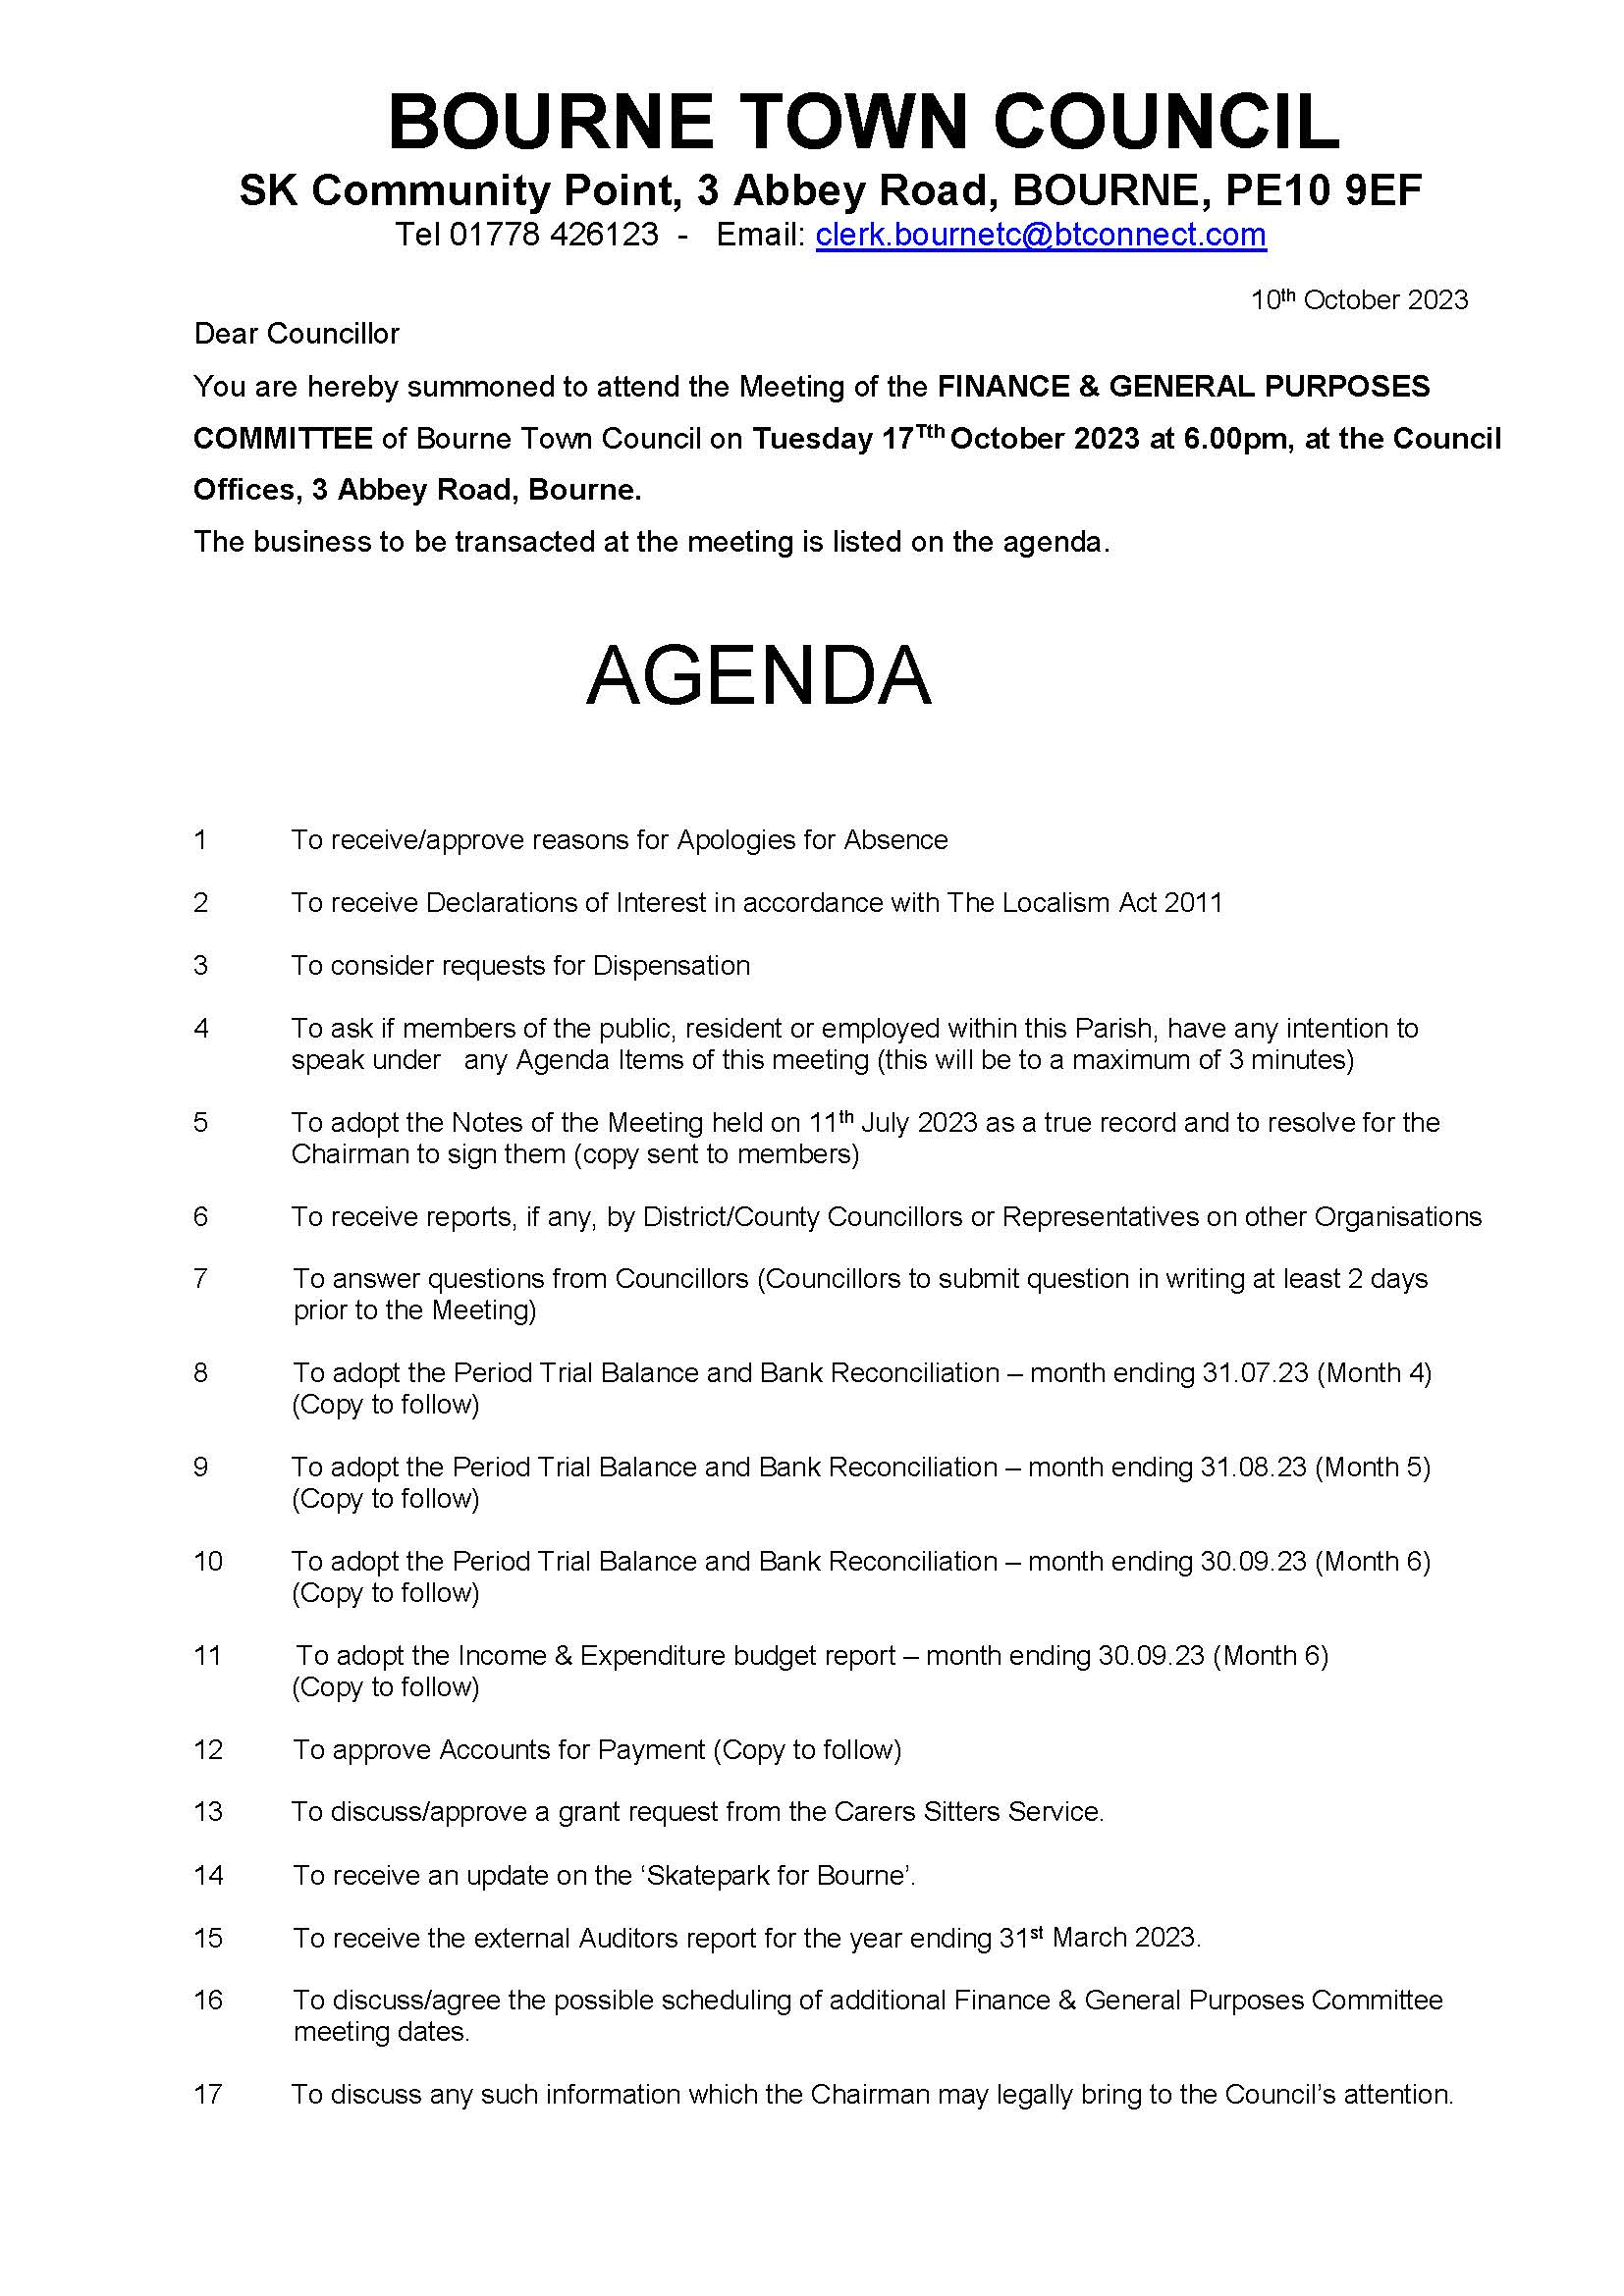 Finance and general purposes agenda 171023